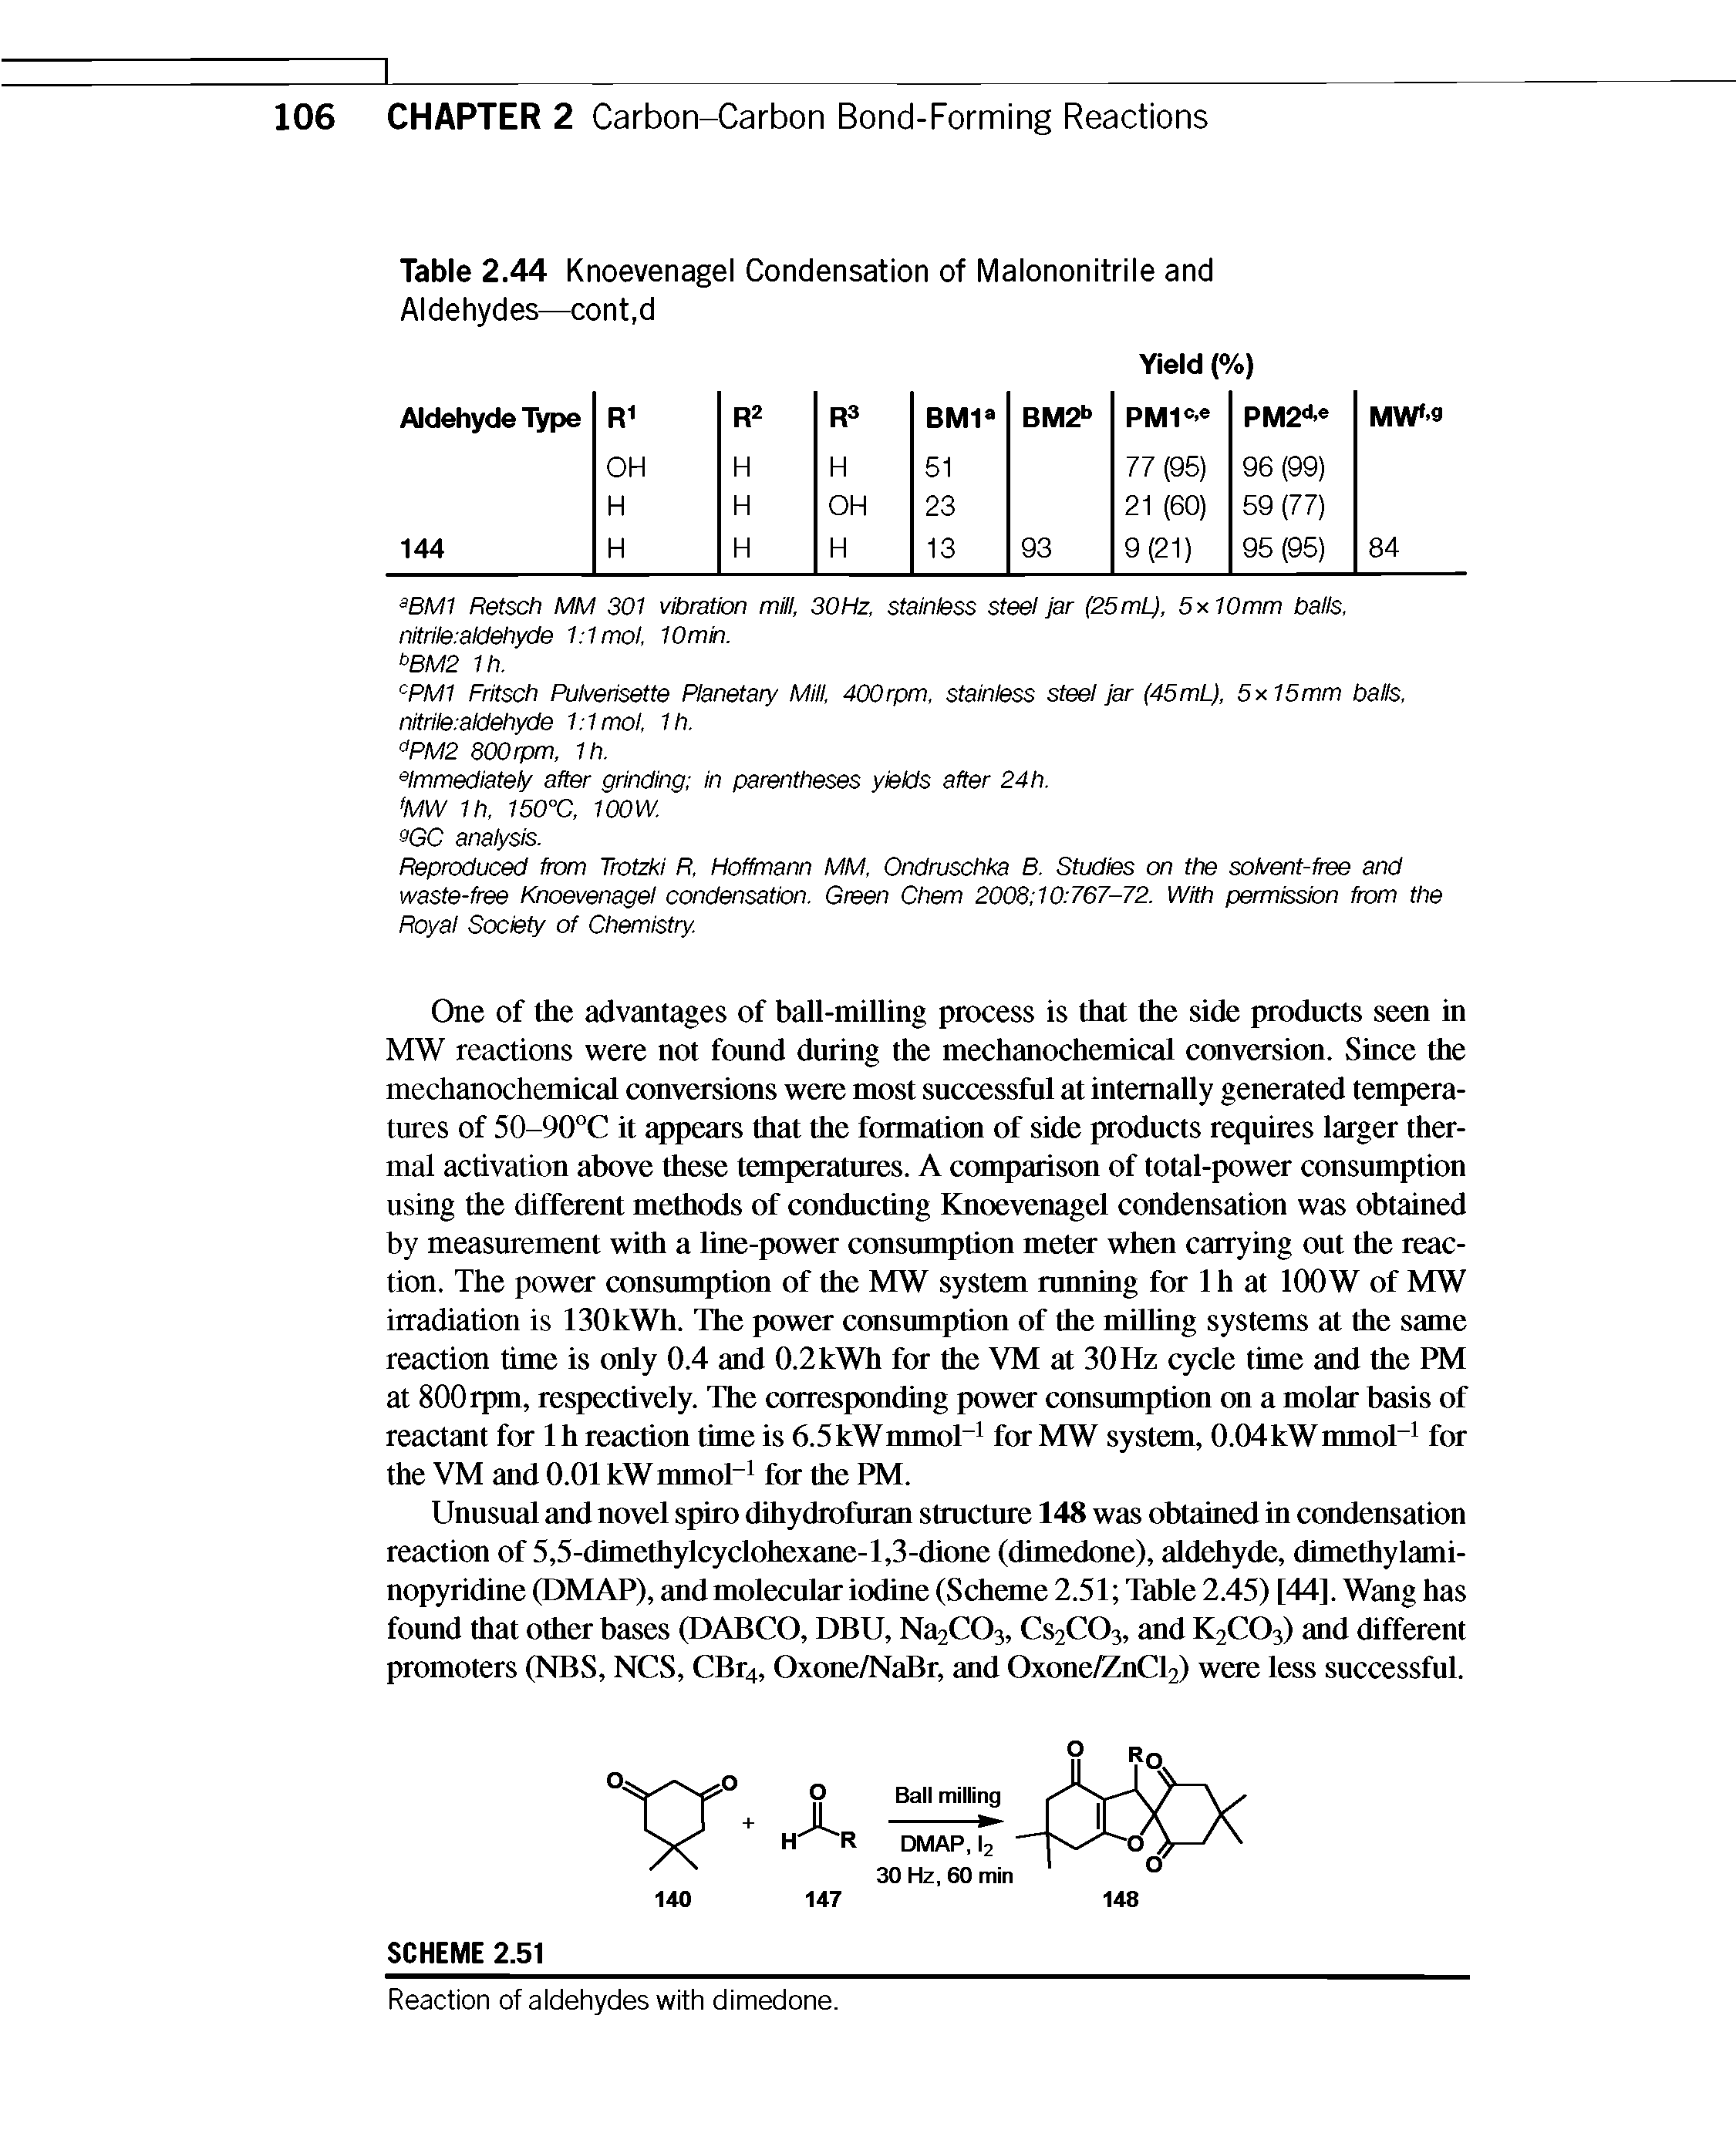 Table 2.44 Knoevenagel Condensation of Malononitrile and Aldehydes—cont,d...